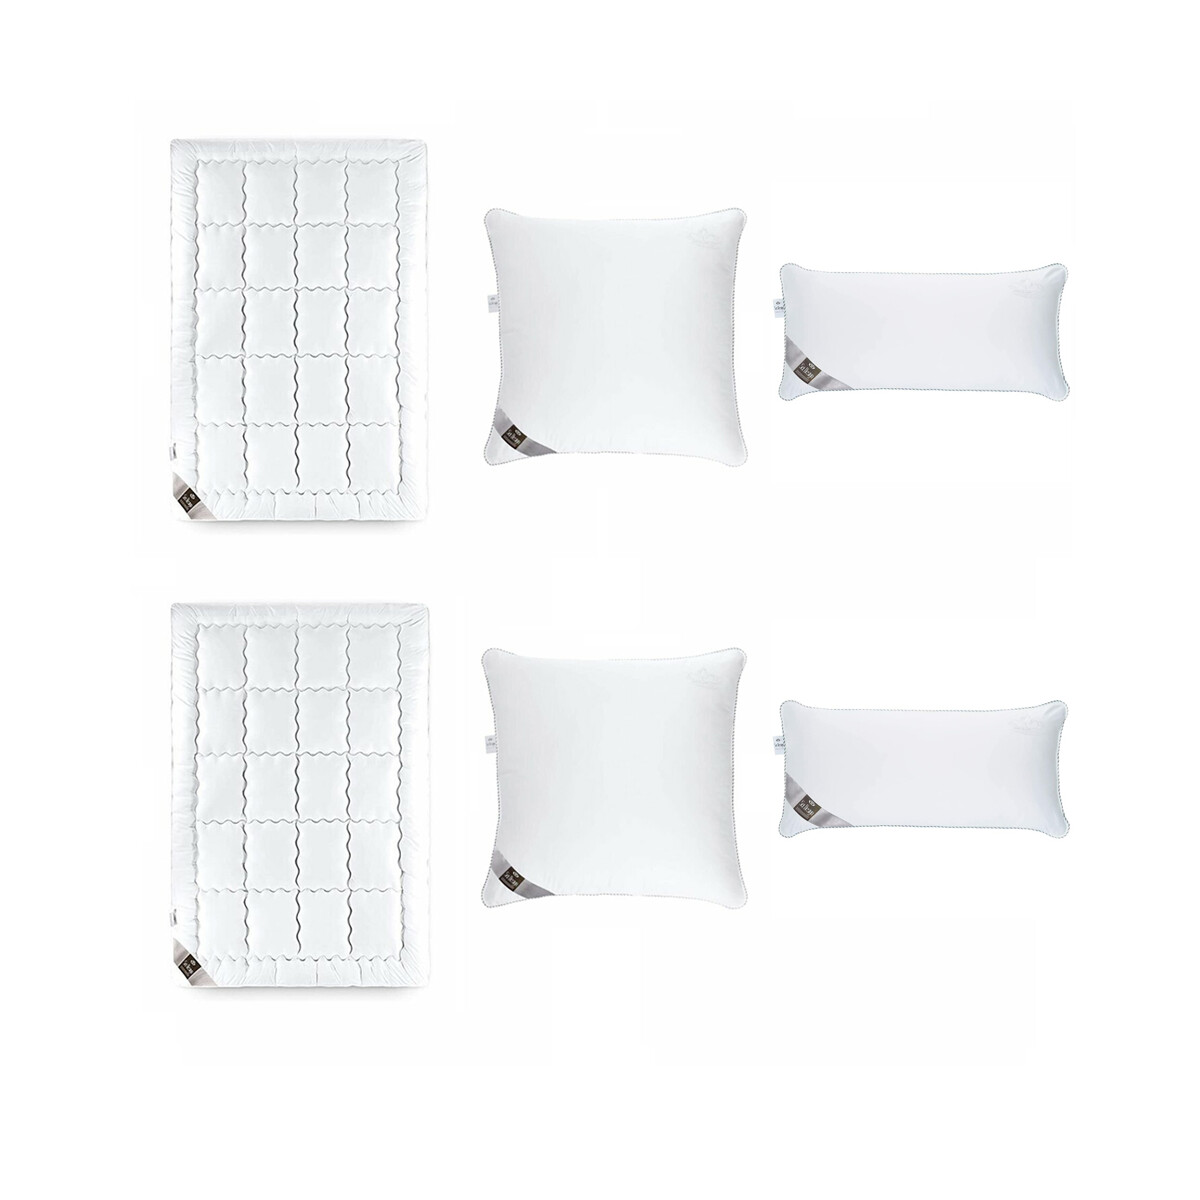 Hochwertige Bettdecken günstig bestellen - Sei Design, 229,90 €